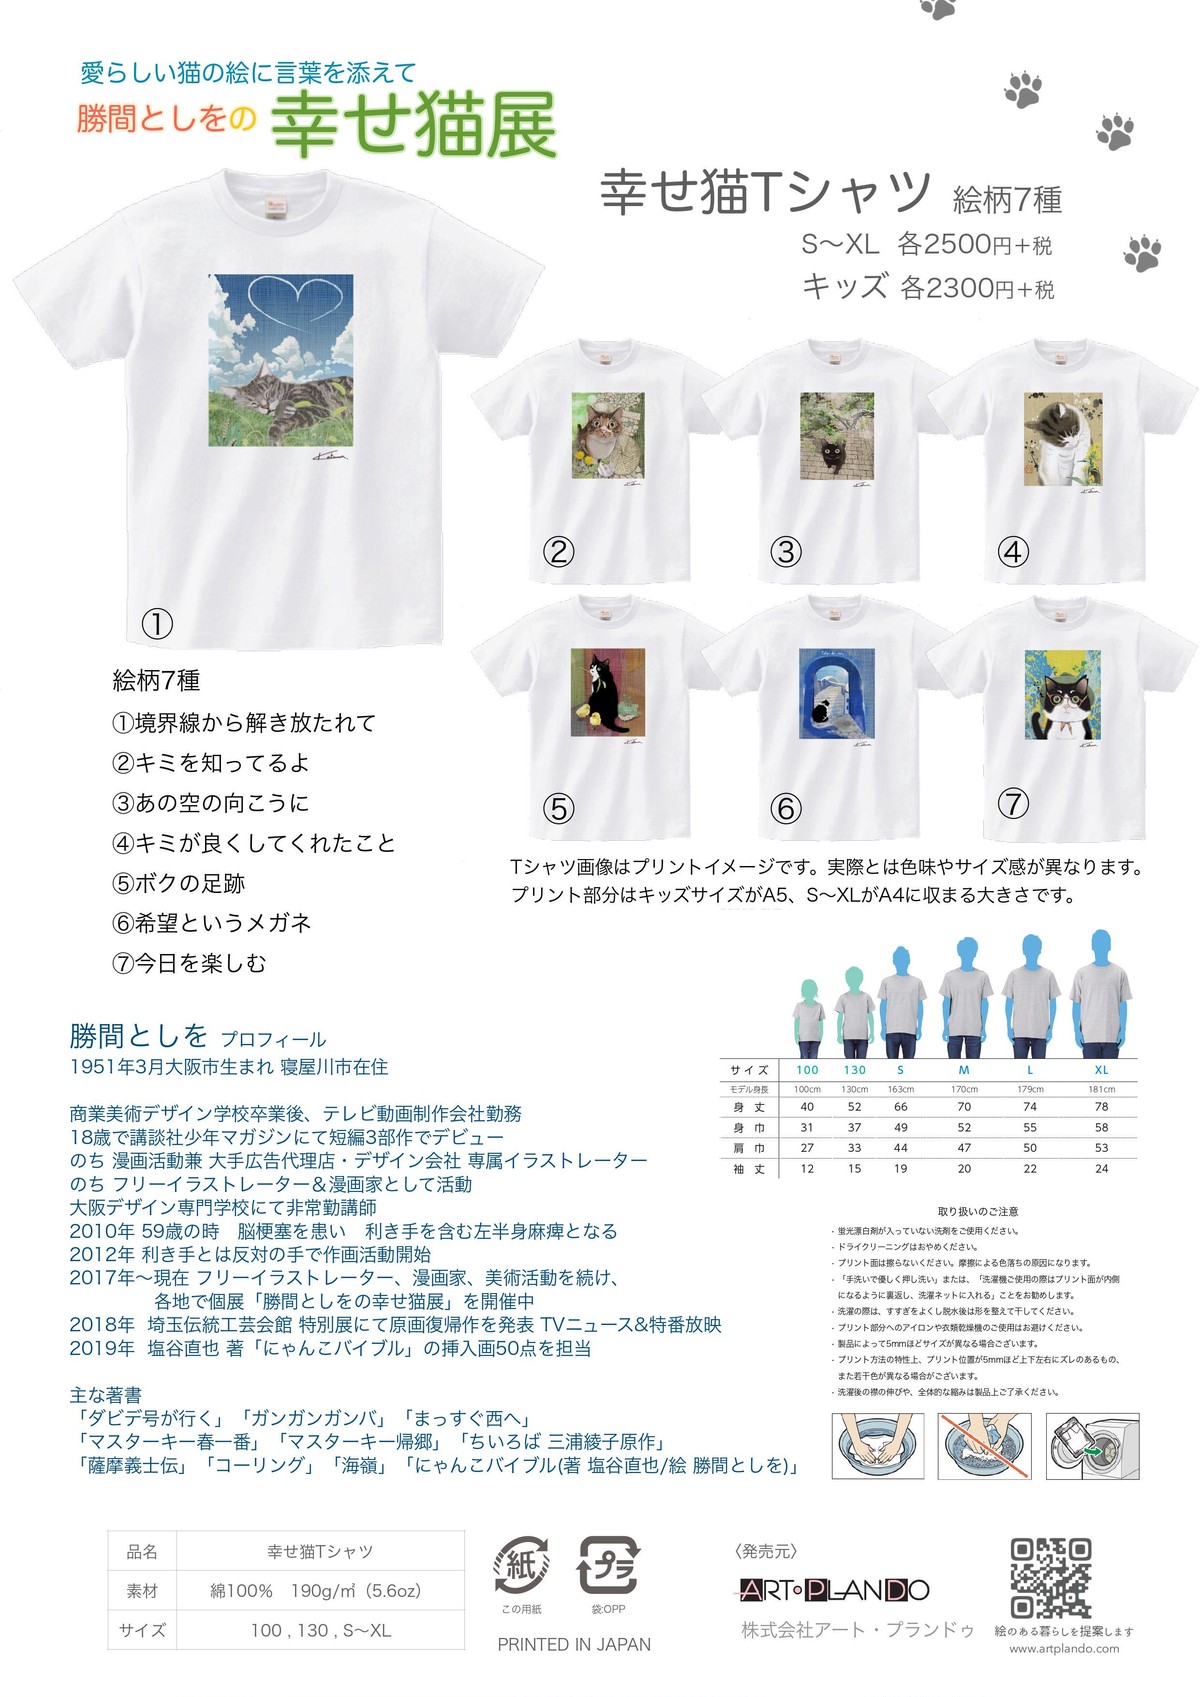 New 勝間としをの幸せ猫グッズ Tシャツ 発売 Art Plan Do ー株式会社アート プランドゥー